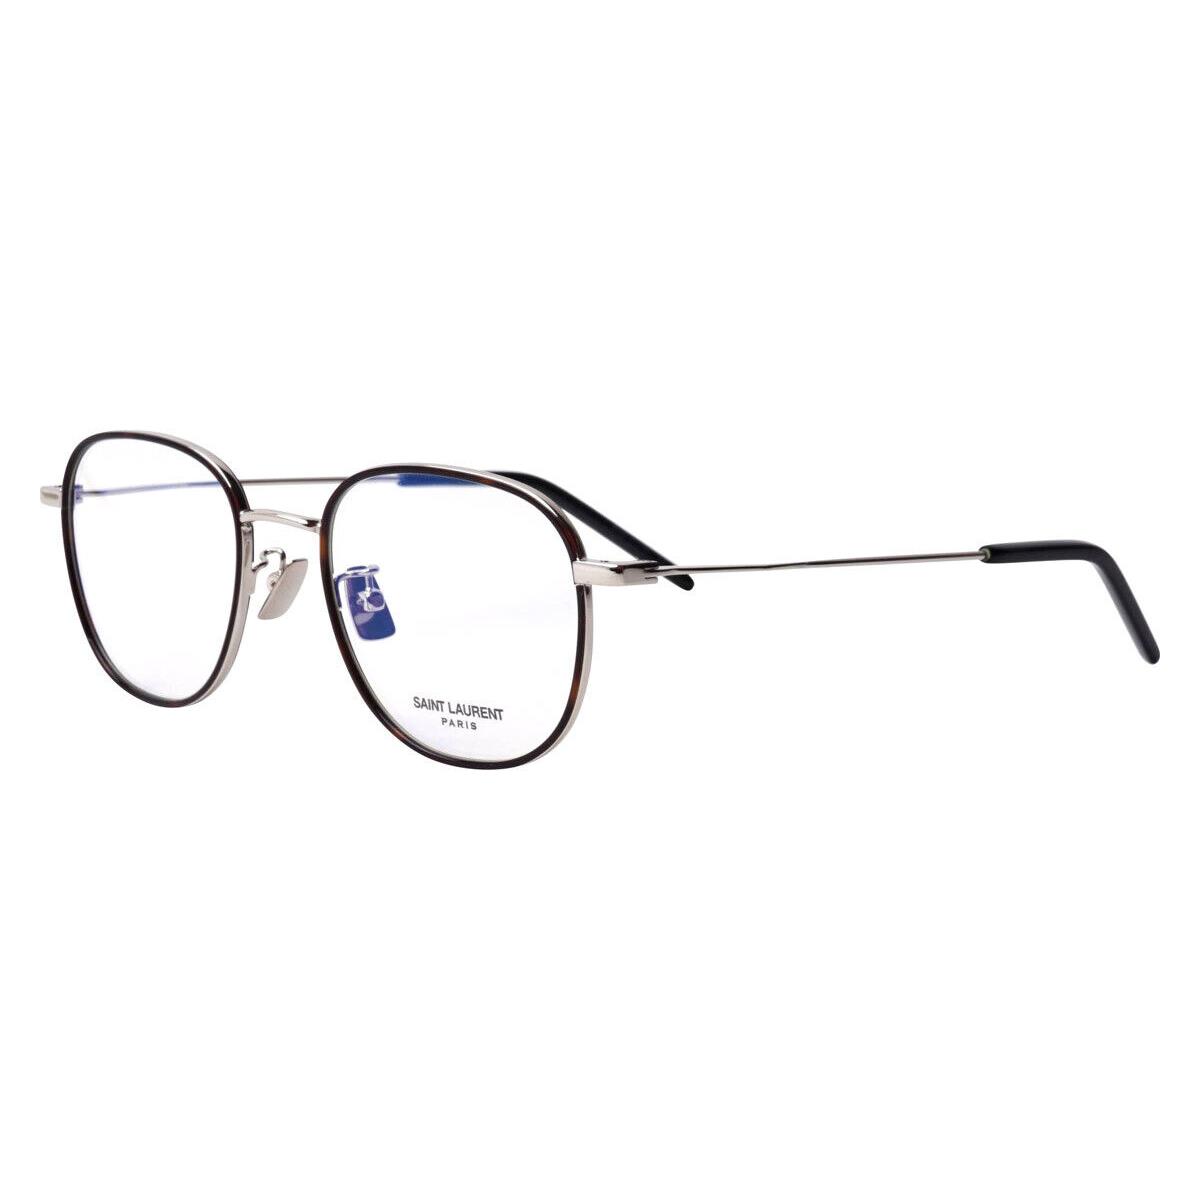 Saint Laurent SL 362 Eyeglasses Unisex Silver Oval 48mm